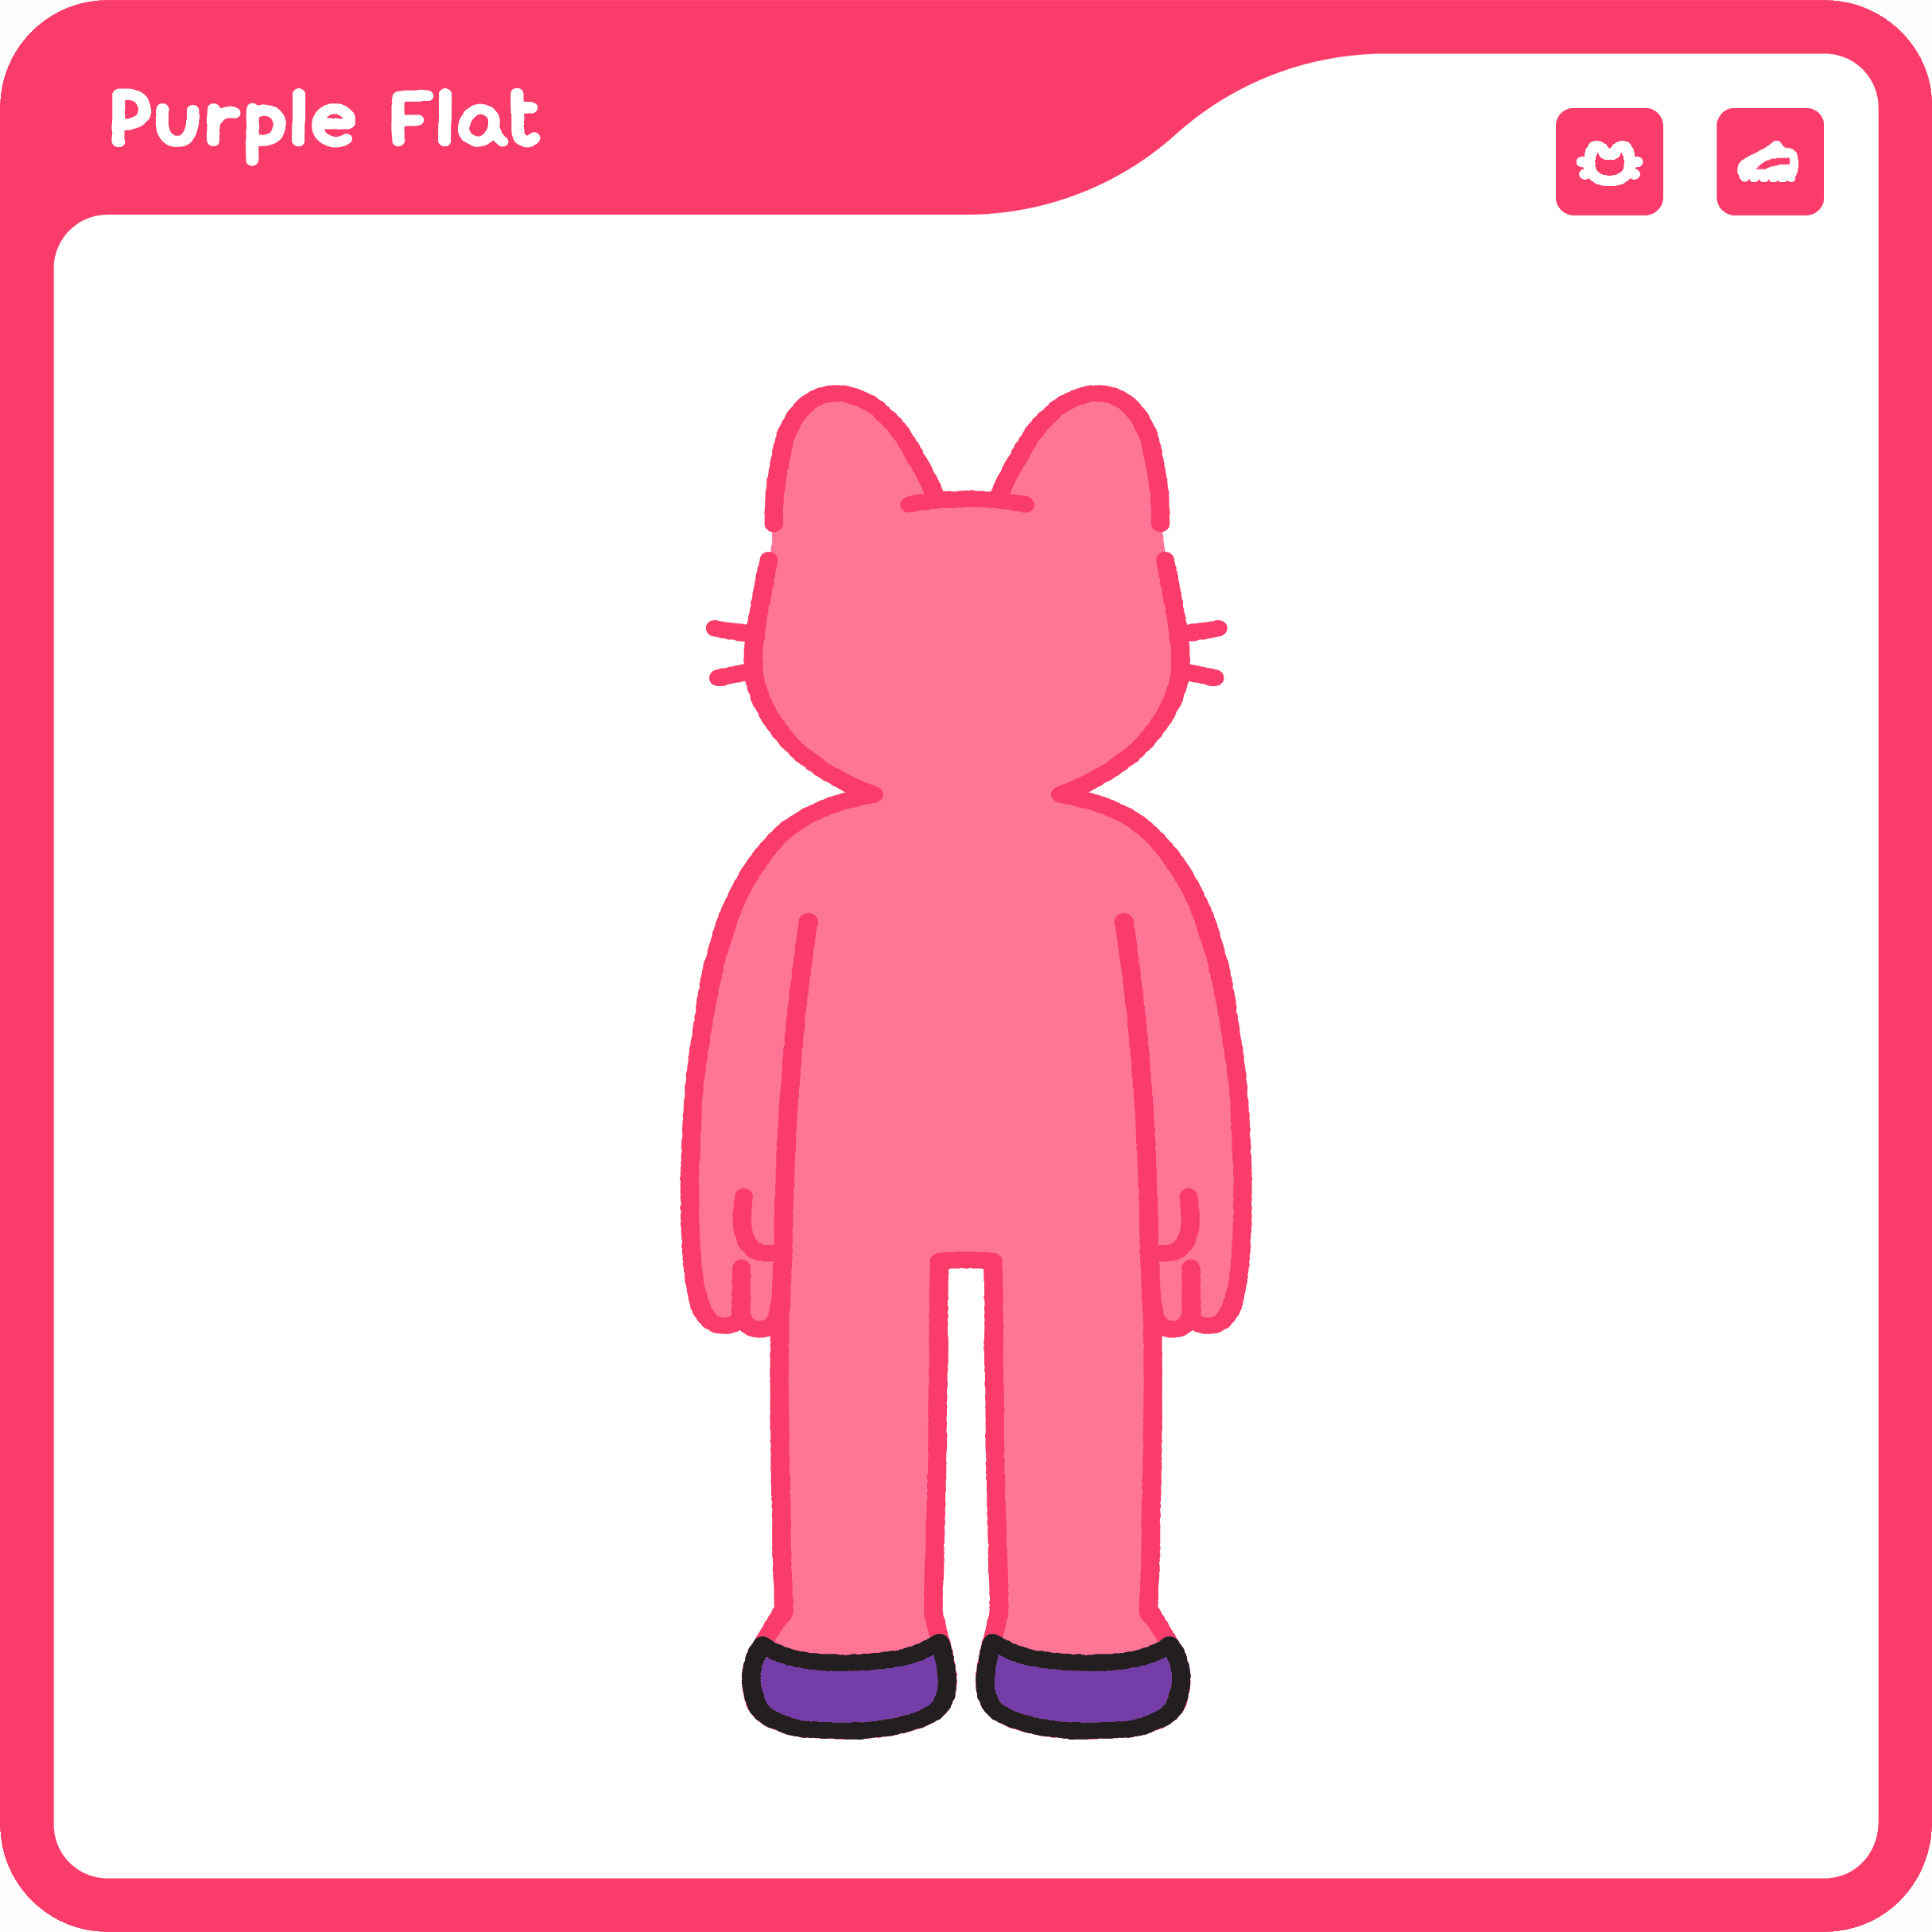 Purple Flat